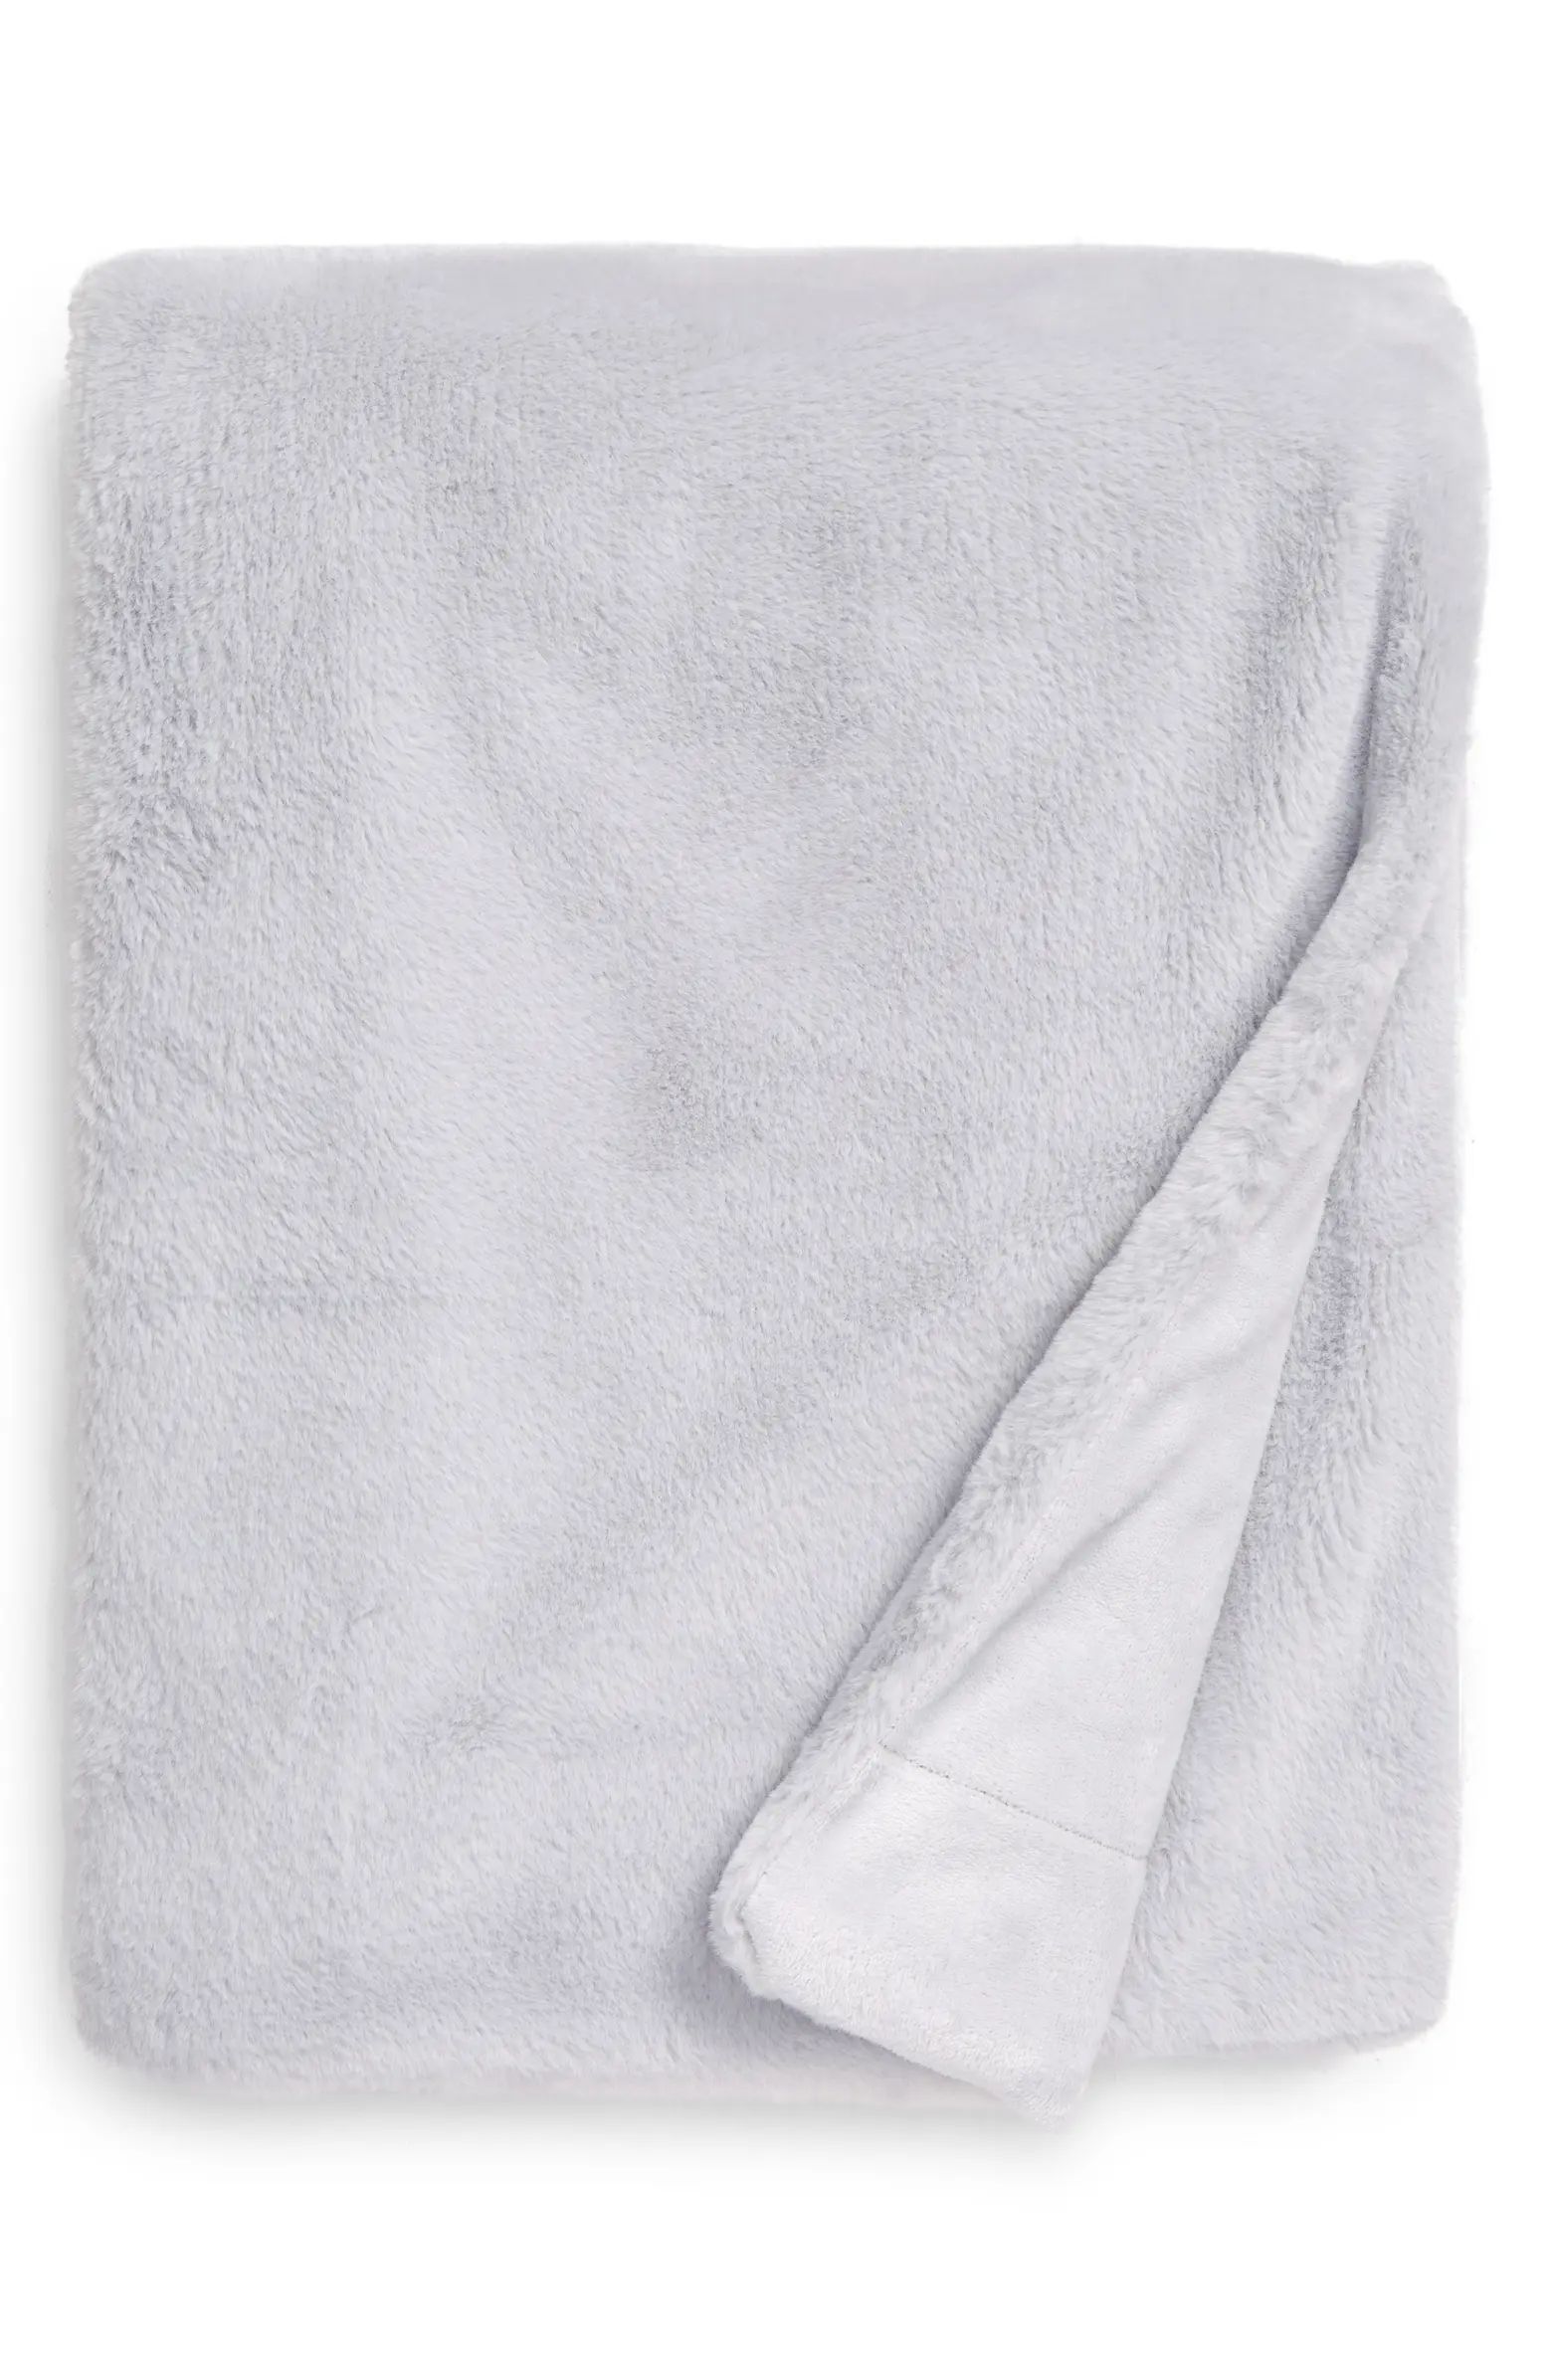 Li'l Marsh Small Plush Blanket | Nordstrom